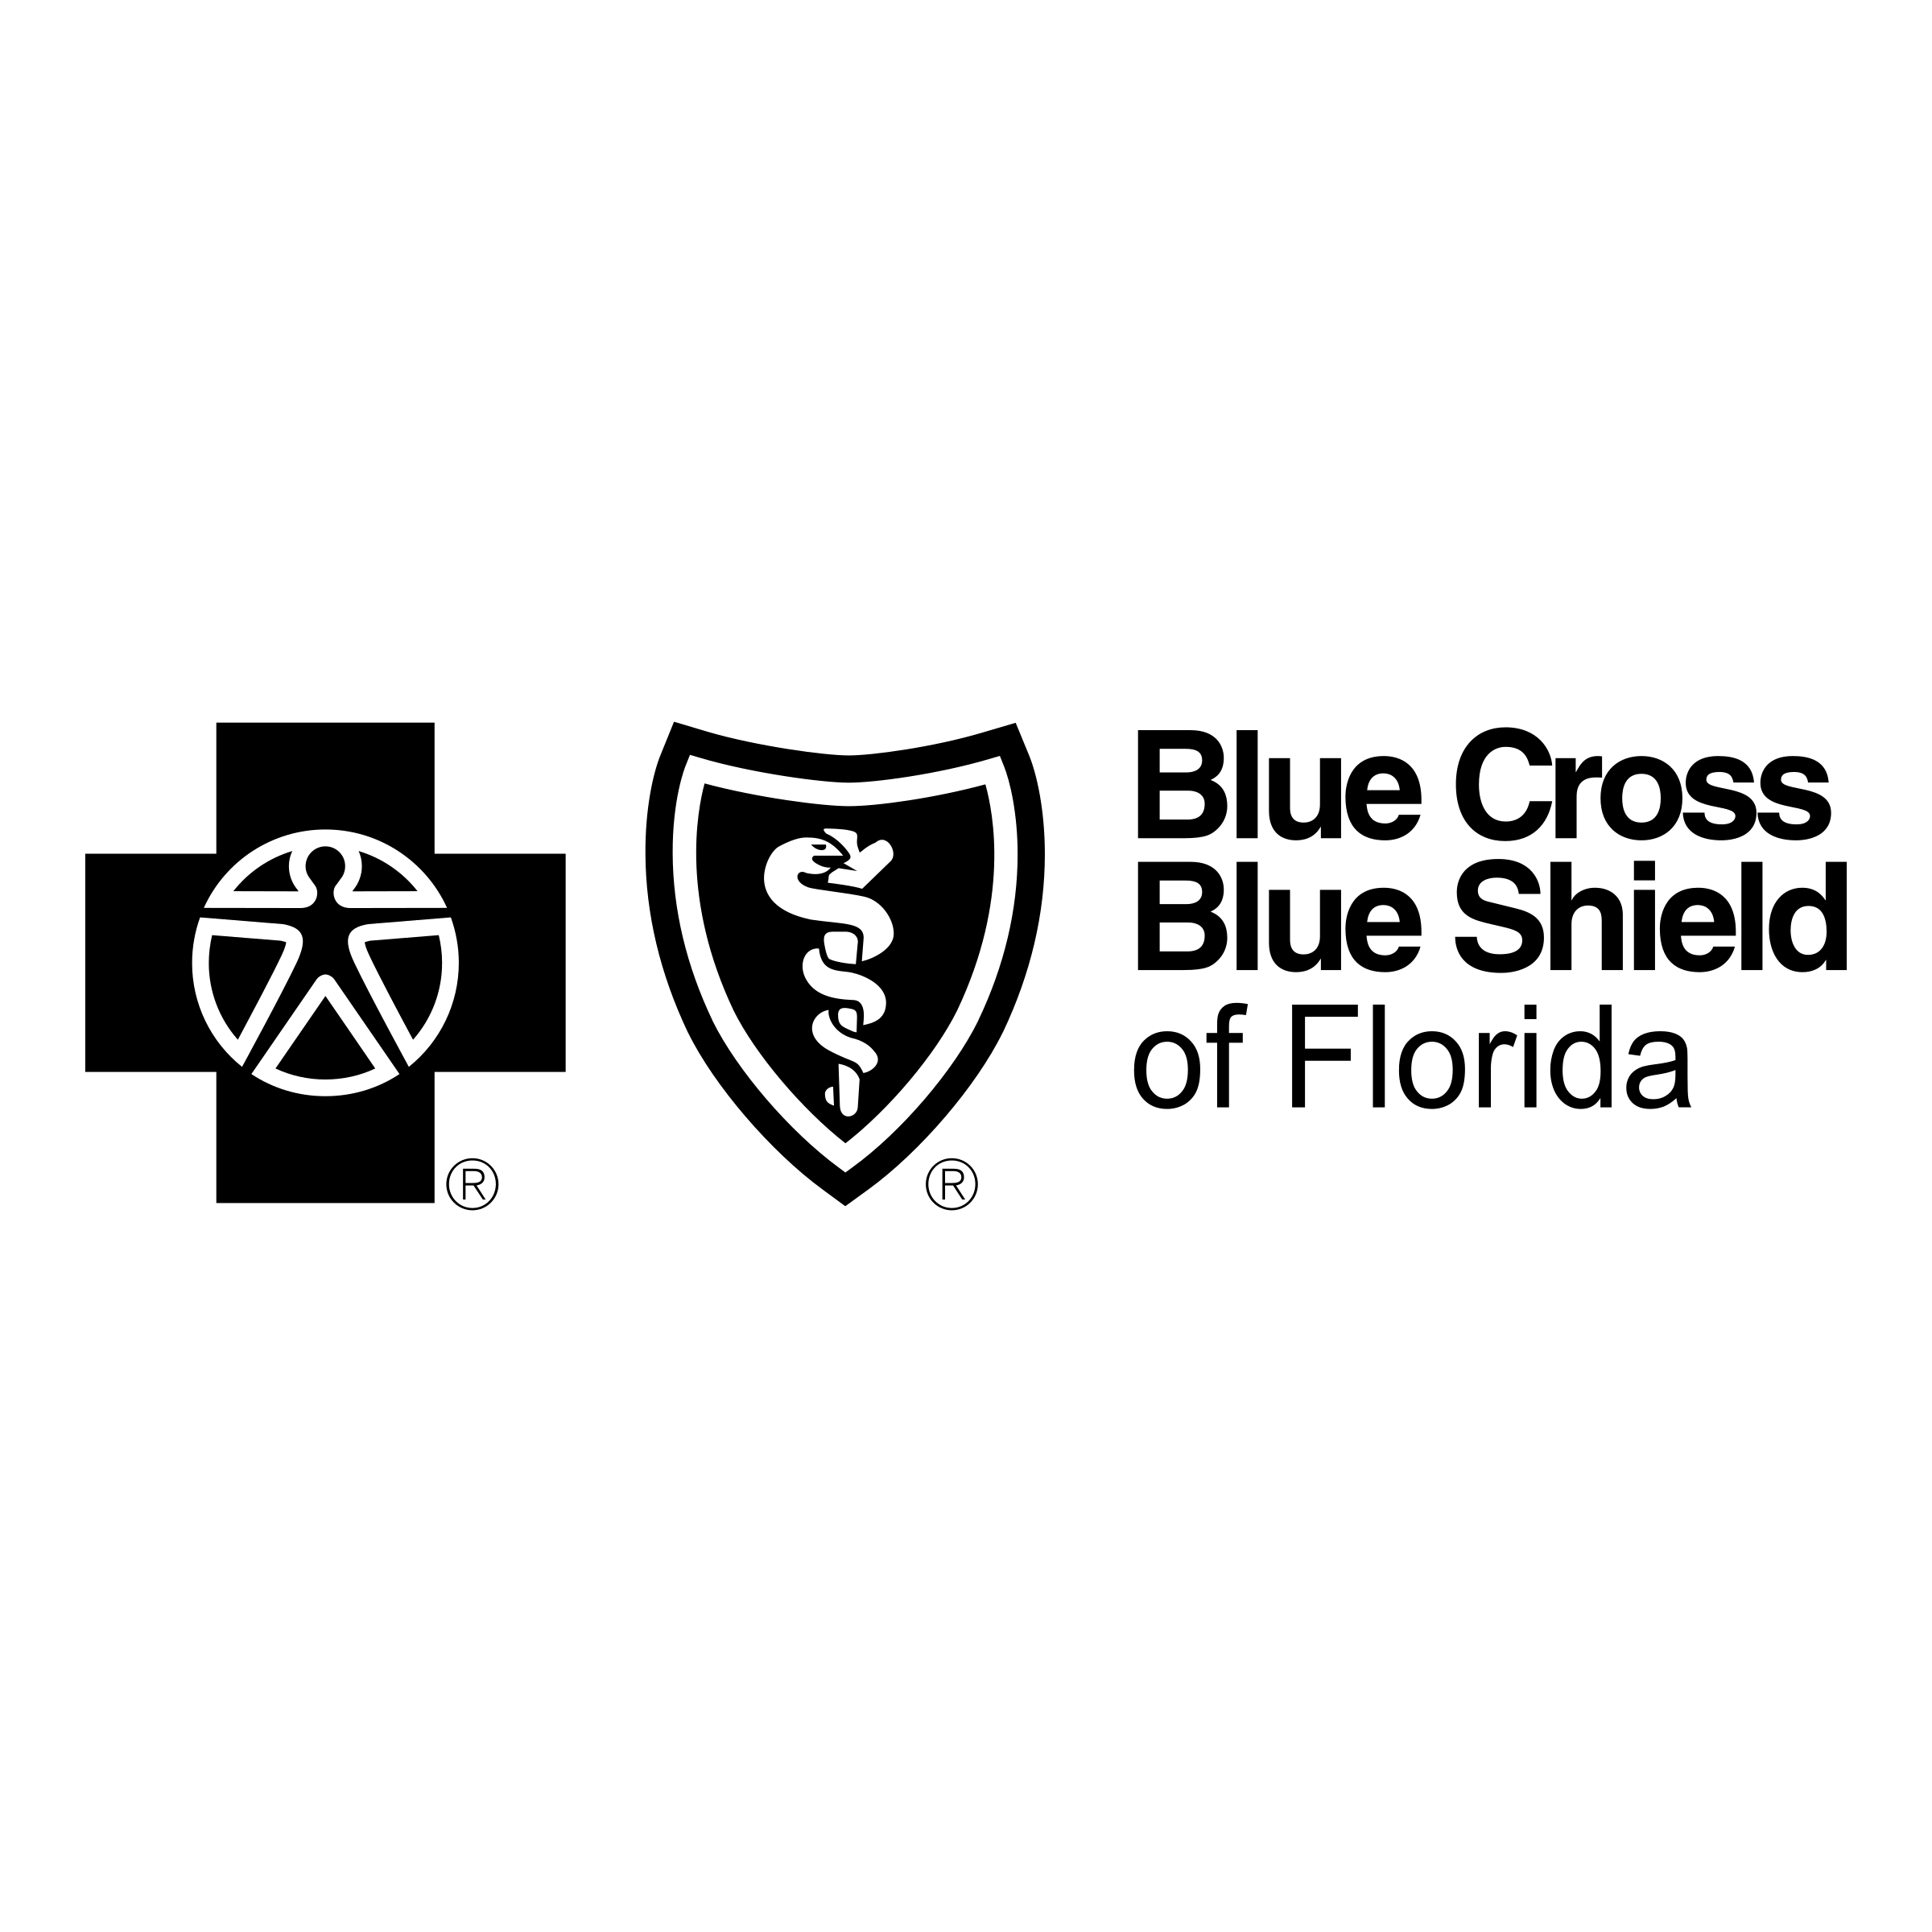 White and Blue Shield Logo - Blue Cross Blue Shield of Florida Logo PNG Transparent & SVG Vector ...